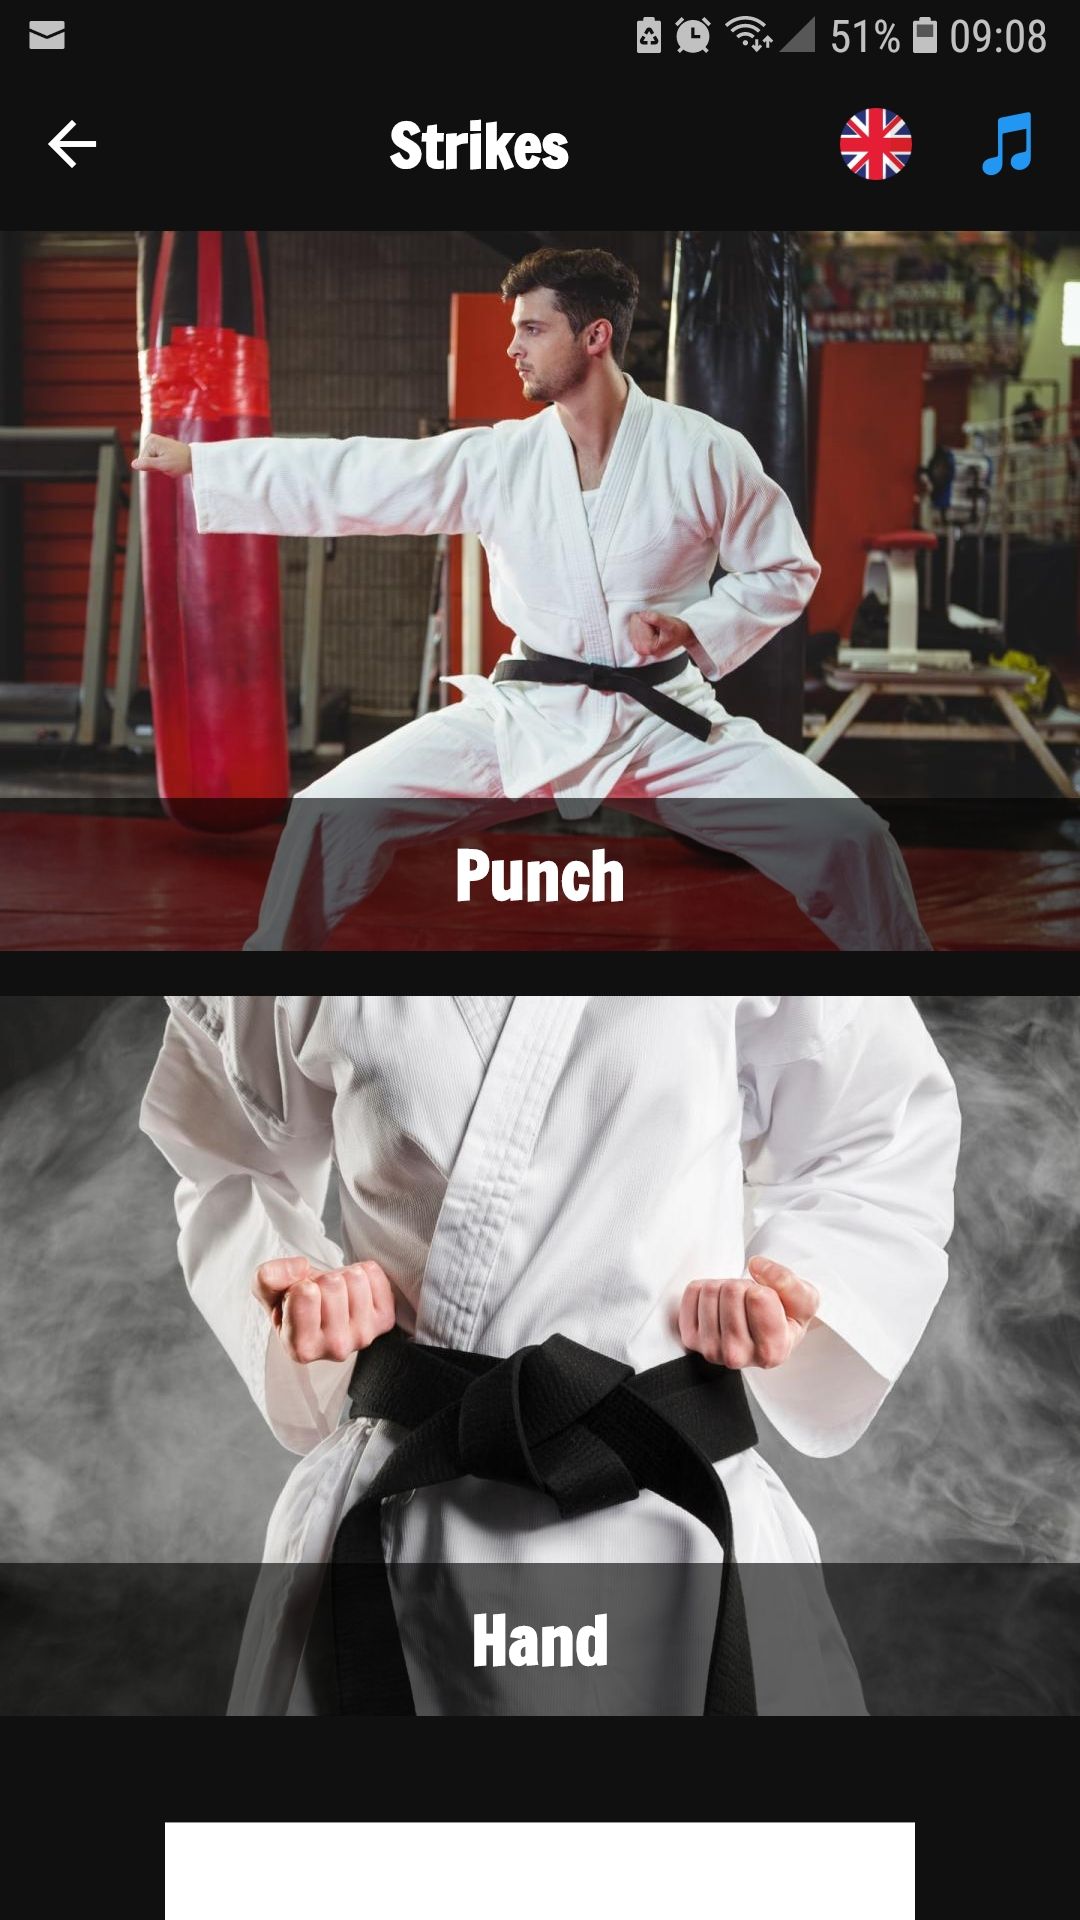 Karate Training strikes punch hand mobile app